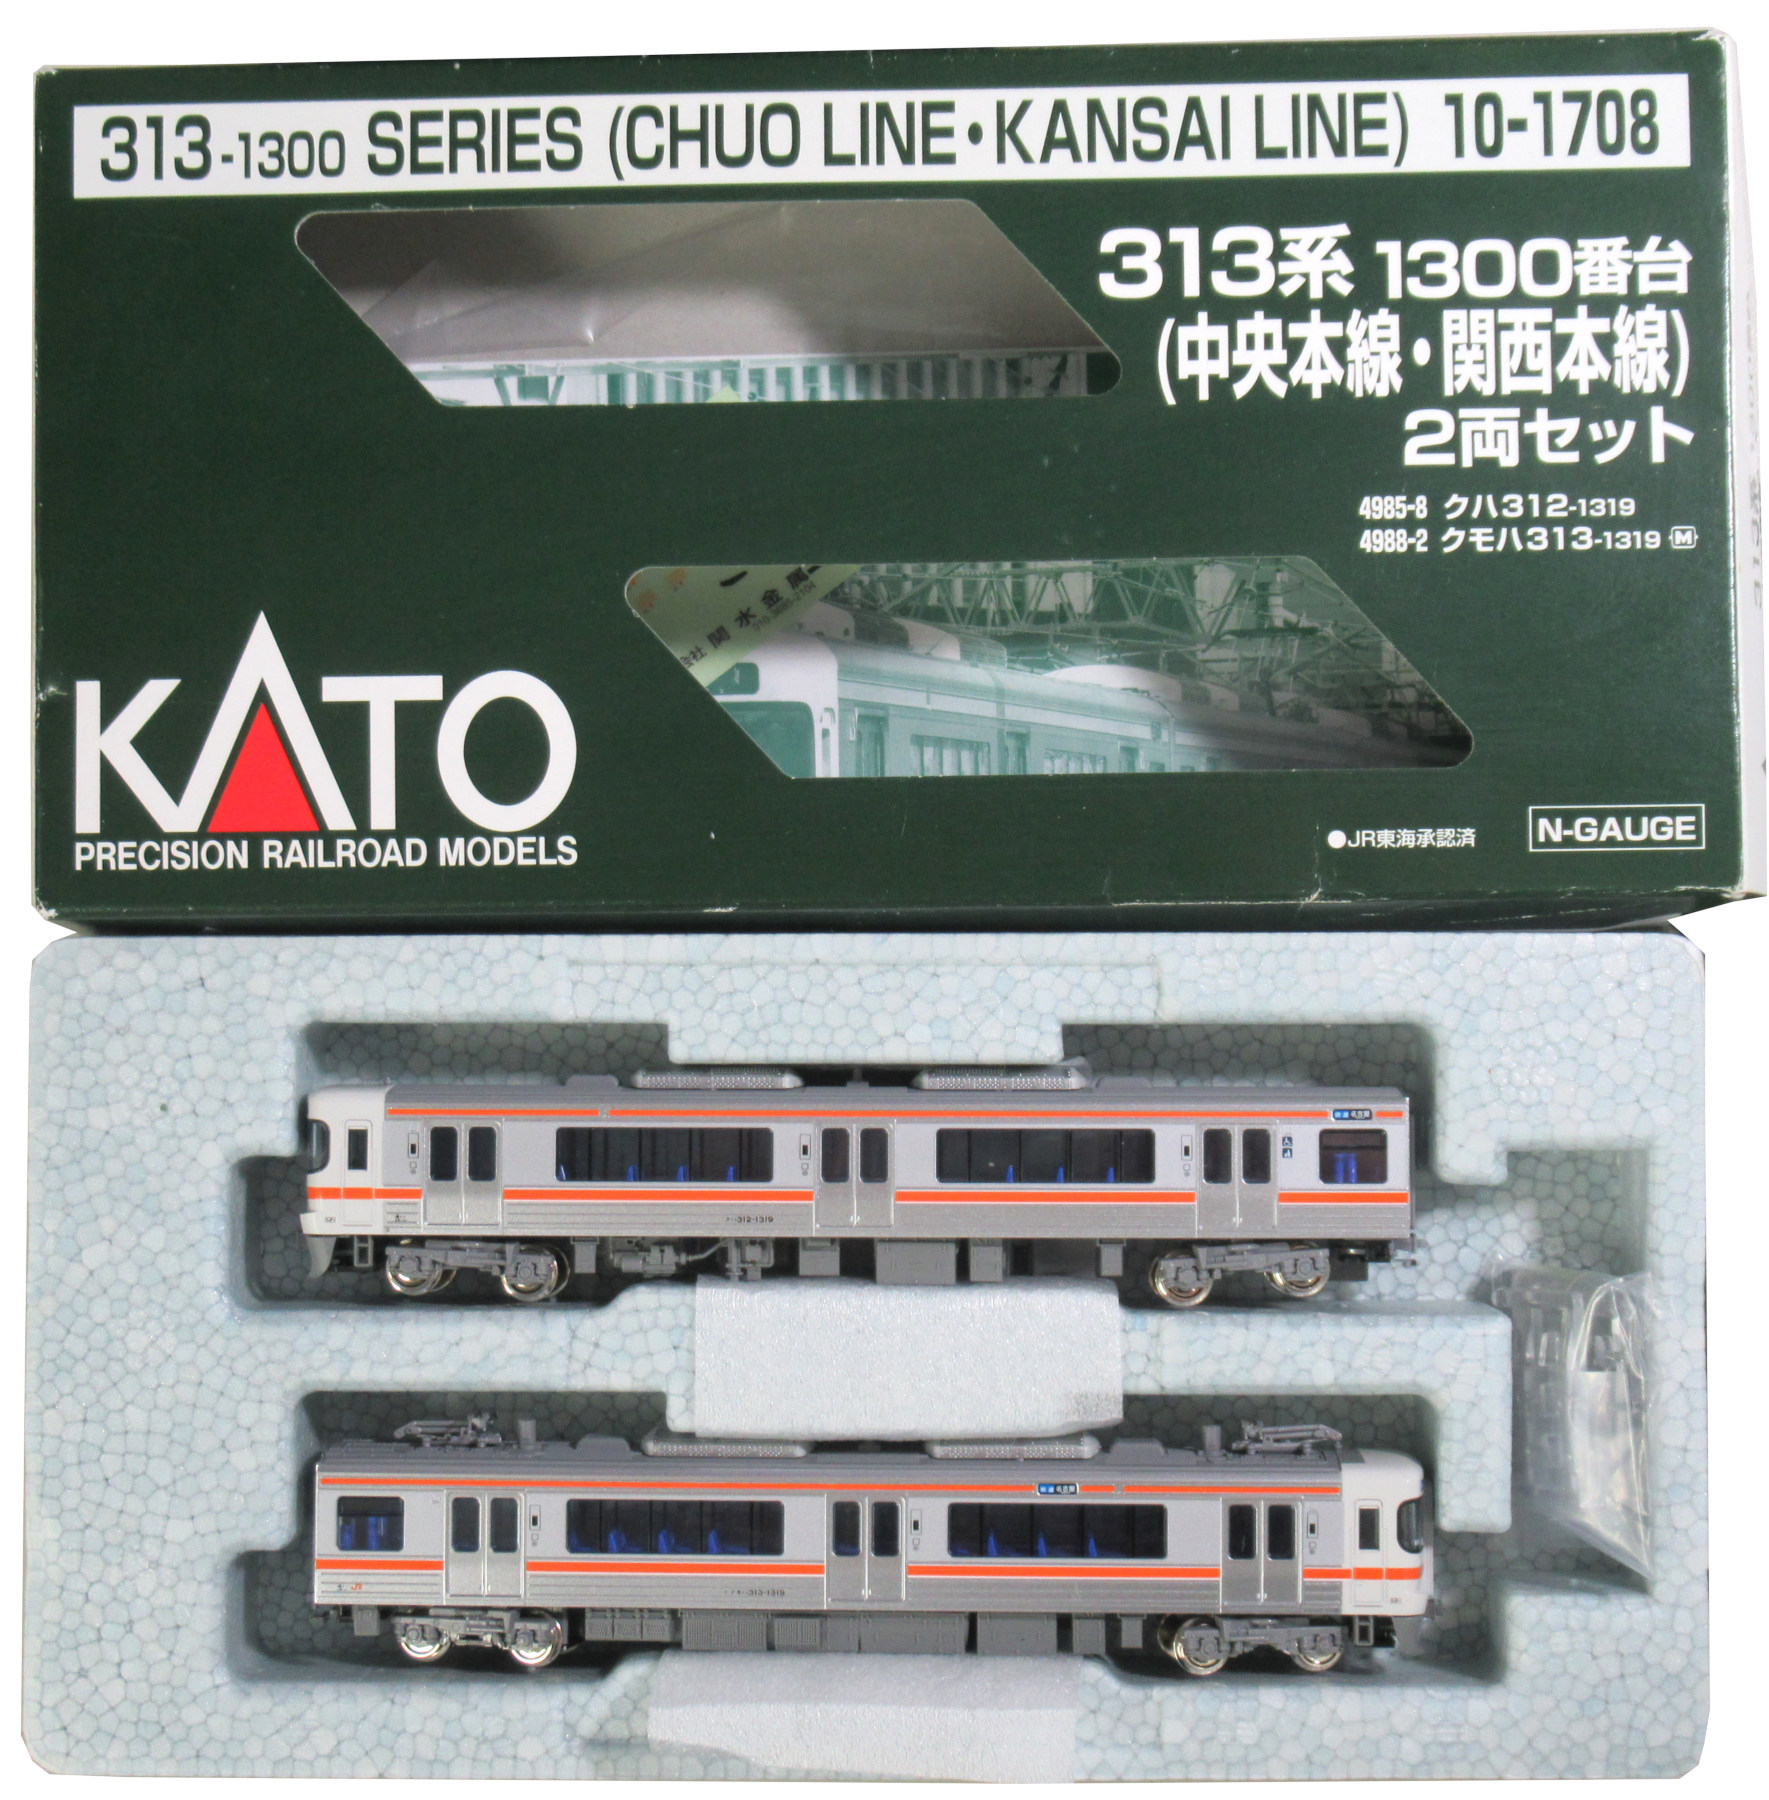 KATO Nゲージ 313系1300番台 中央本線・関西本線 2両セット 10-1708 